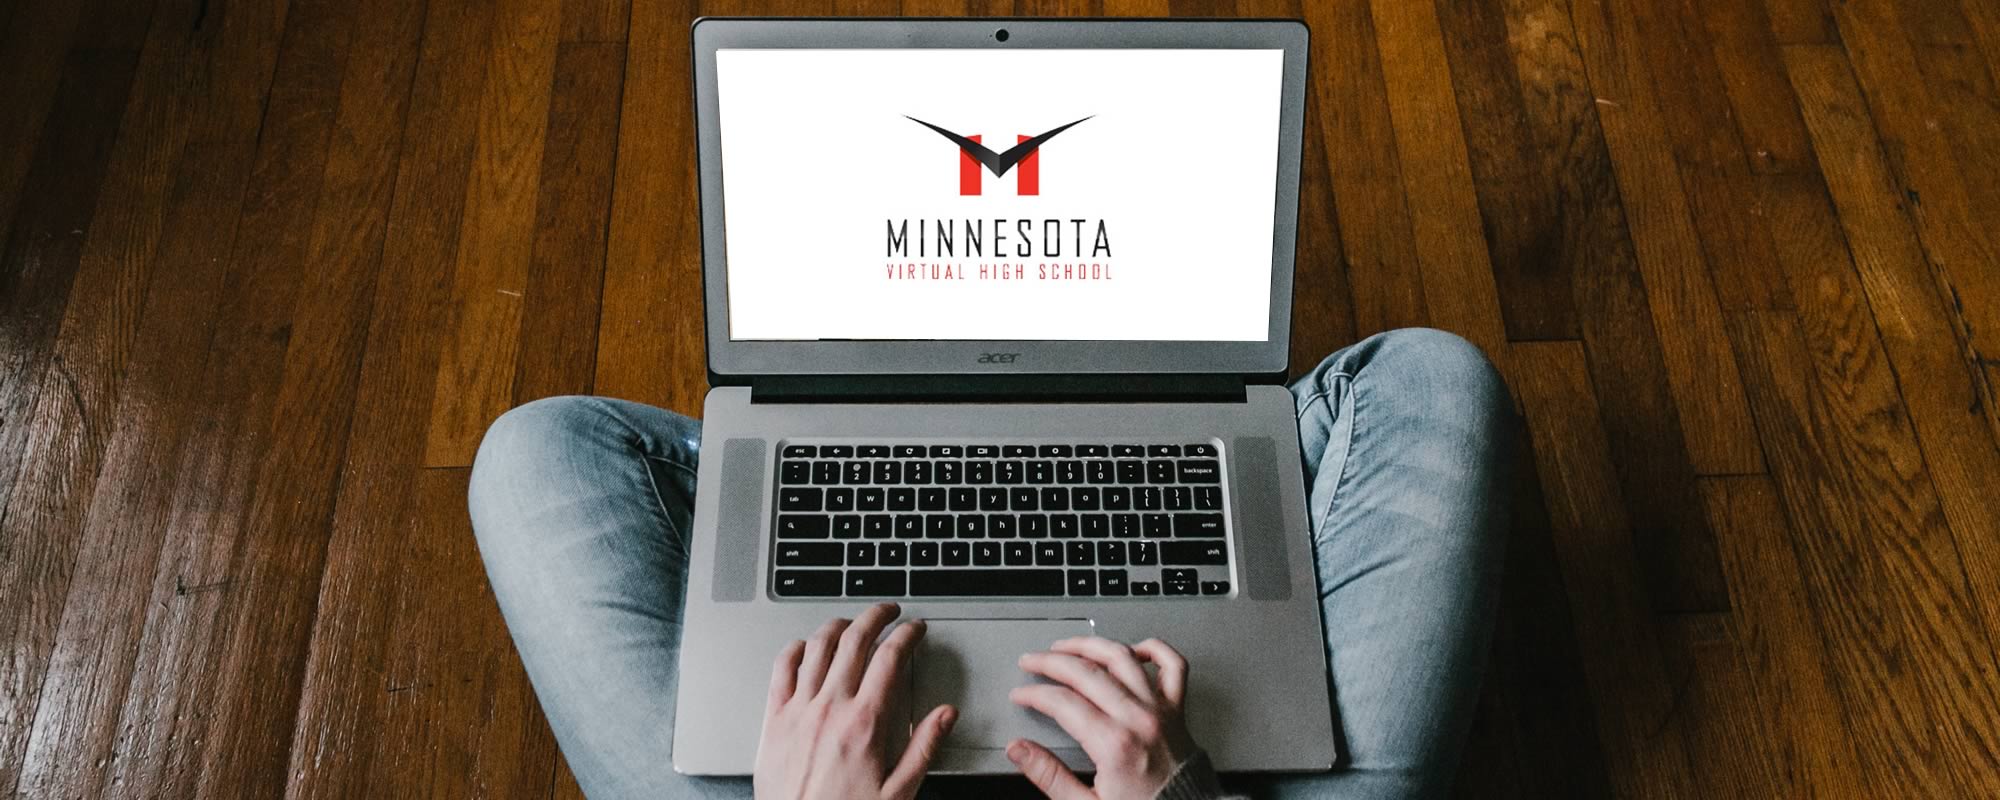 Minnesota Online Middle School and High School